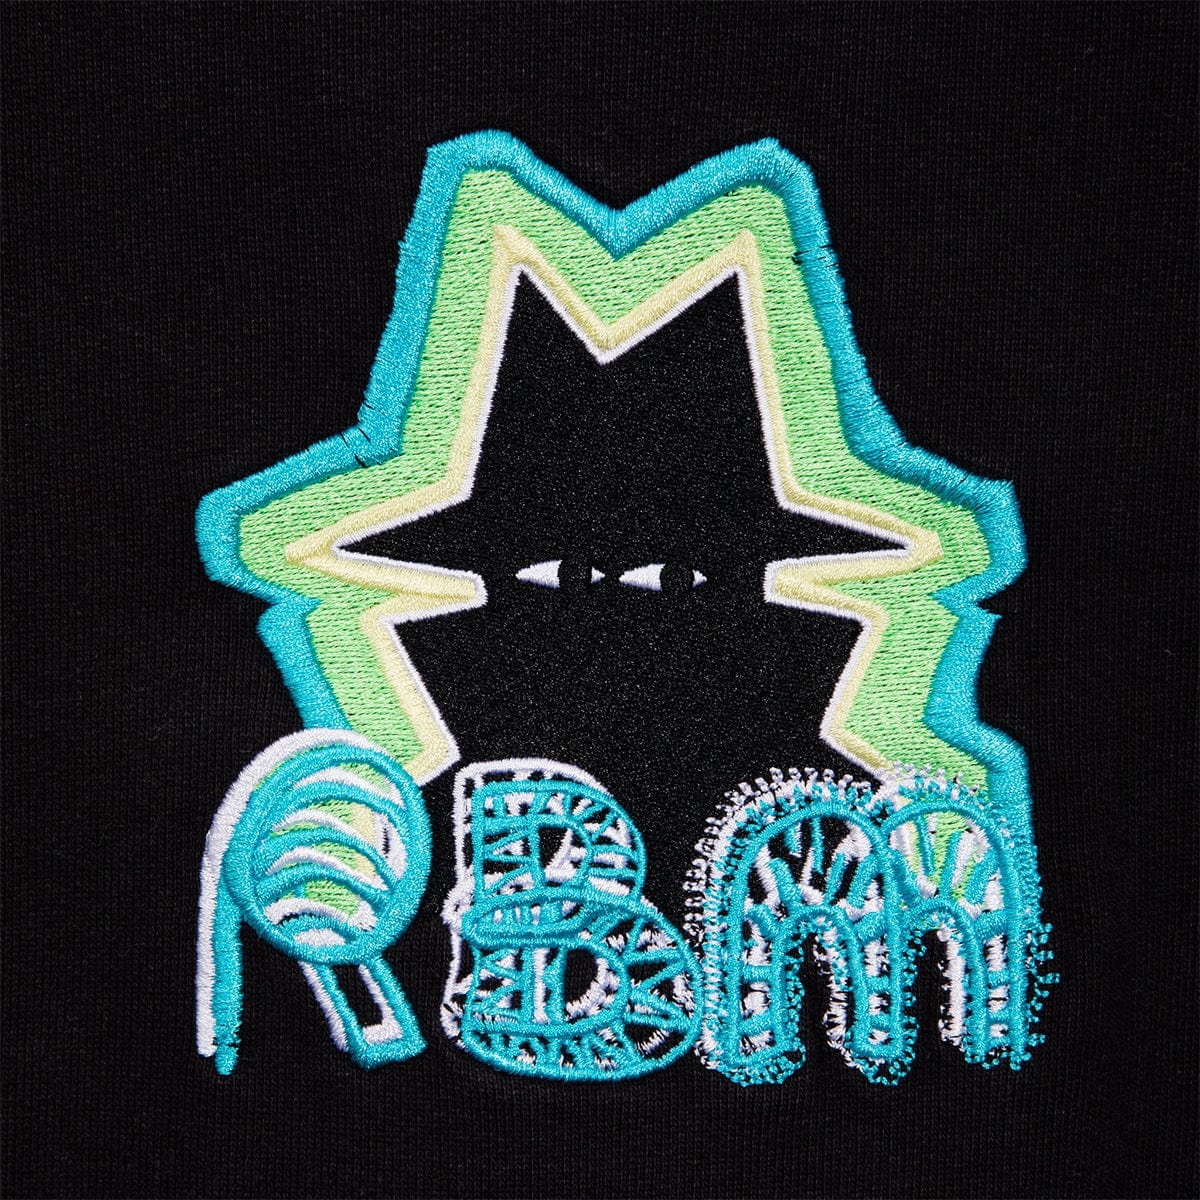 Real Bad Man Hoodies & Sweatshirts VIBRATION CREW (ORGANIC)